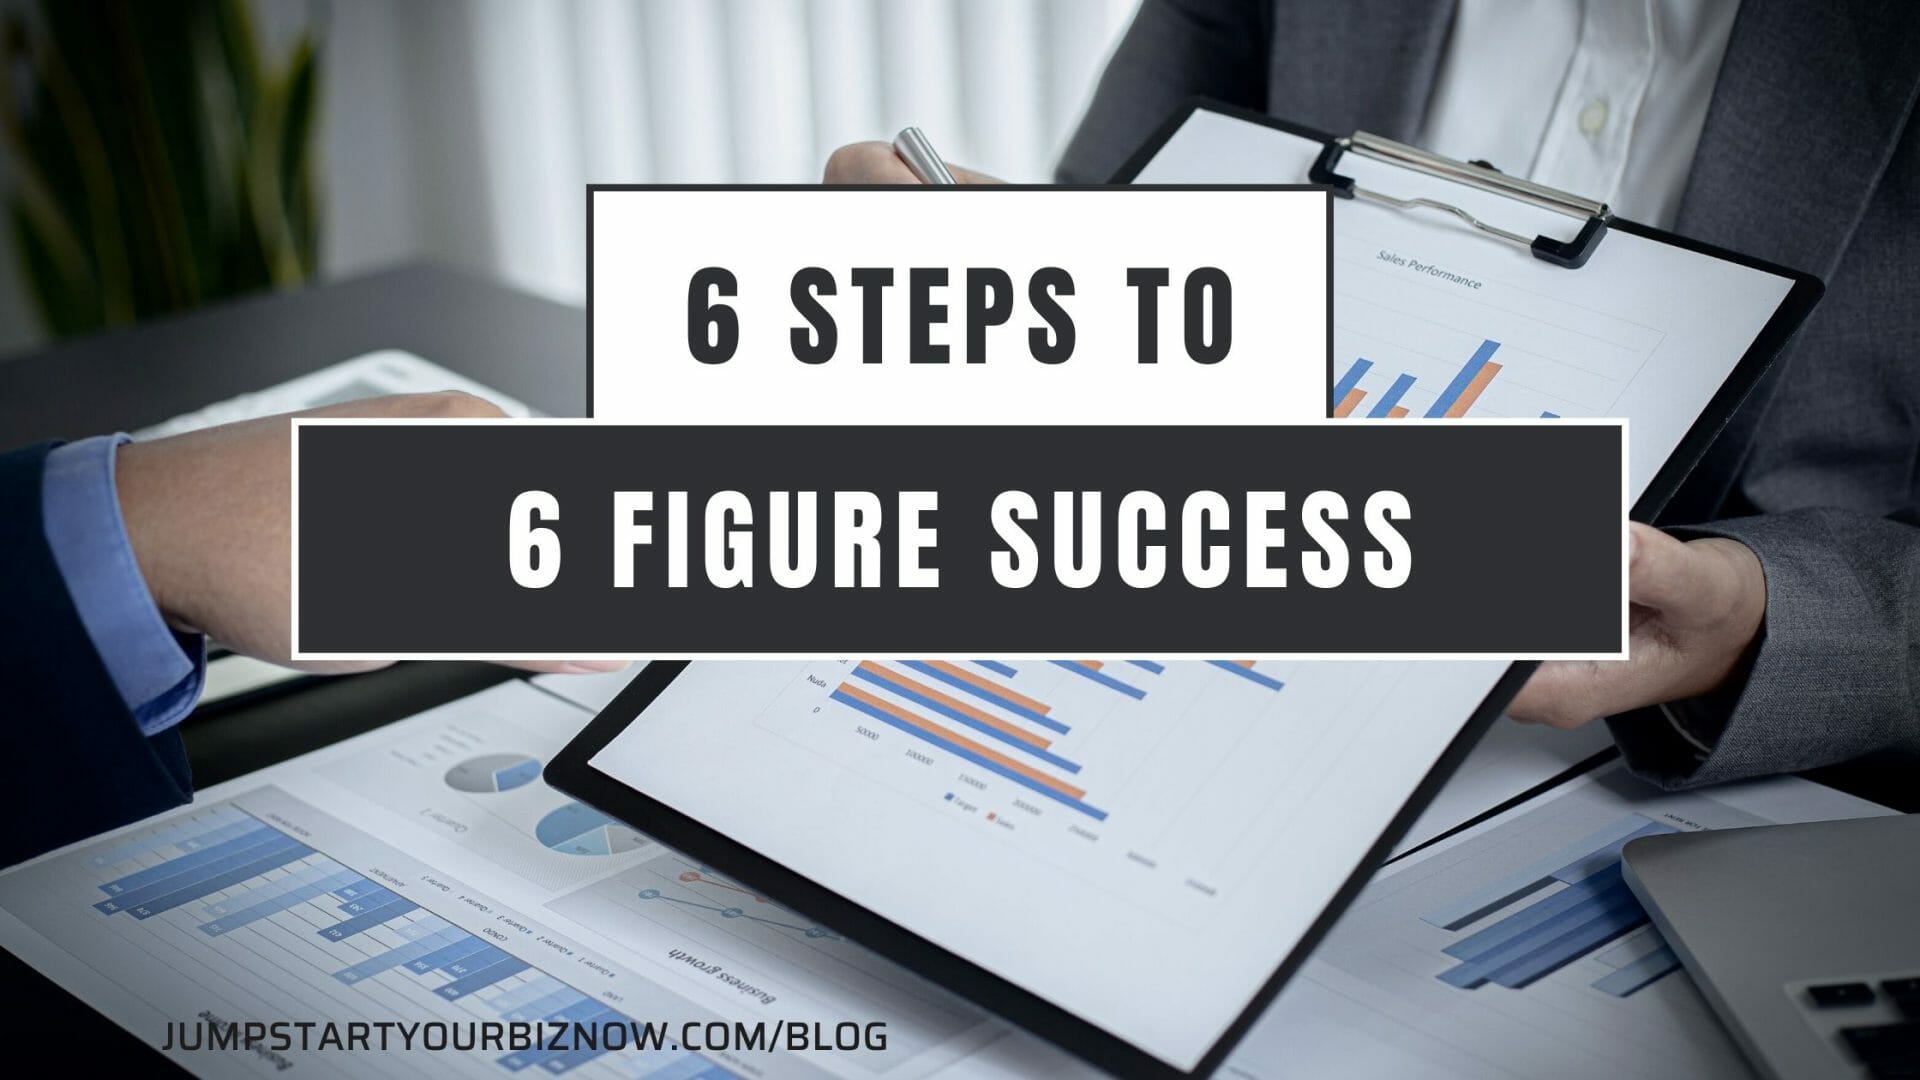 6 Steps to 6 Figure Success